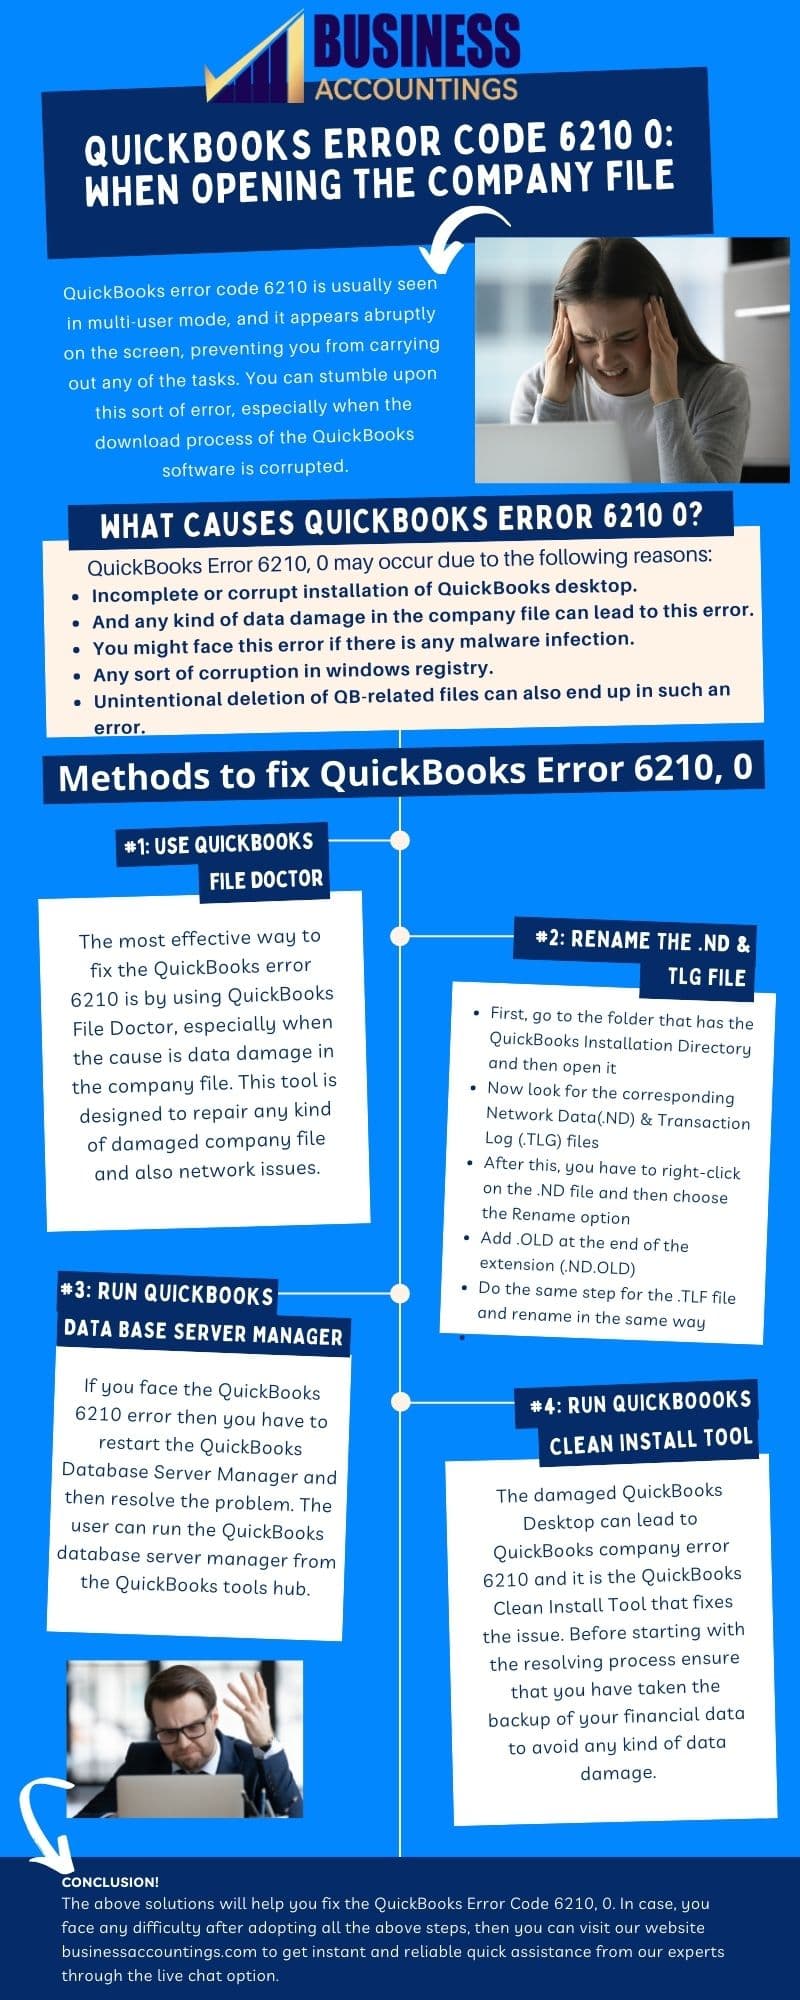 Infographic To Fix QuickBooks Error 6210, 0